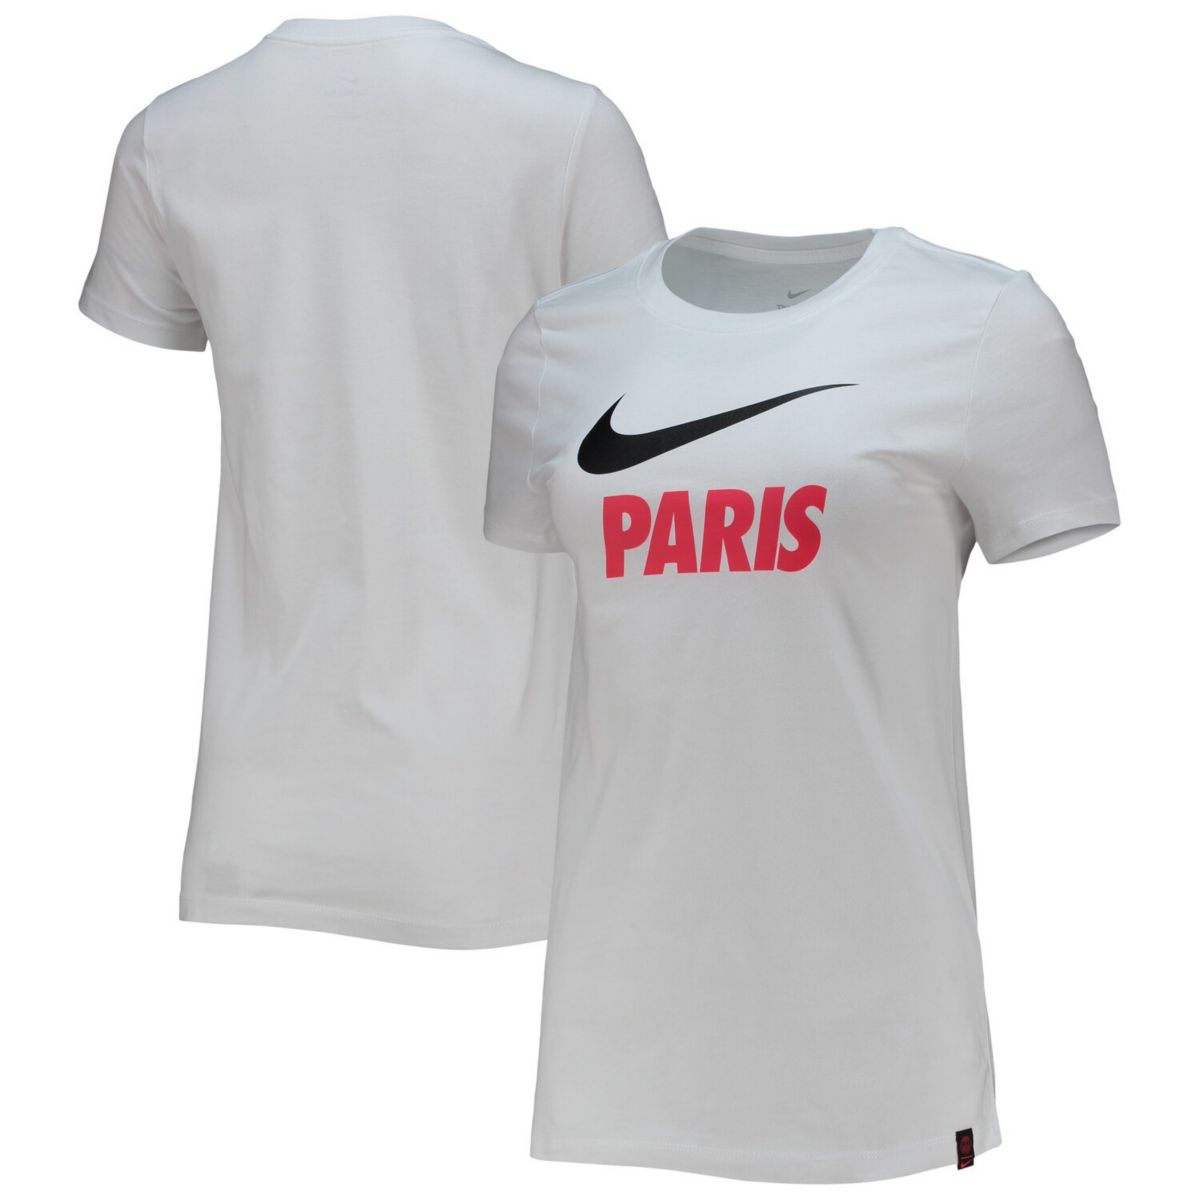 Футболка Paris Saint Germain. Футболка Nike Paris. Футболка PSG Nike хлопок белая. Найк париж